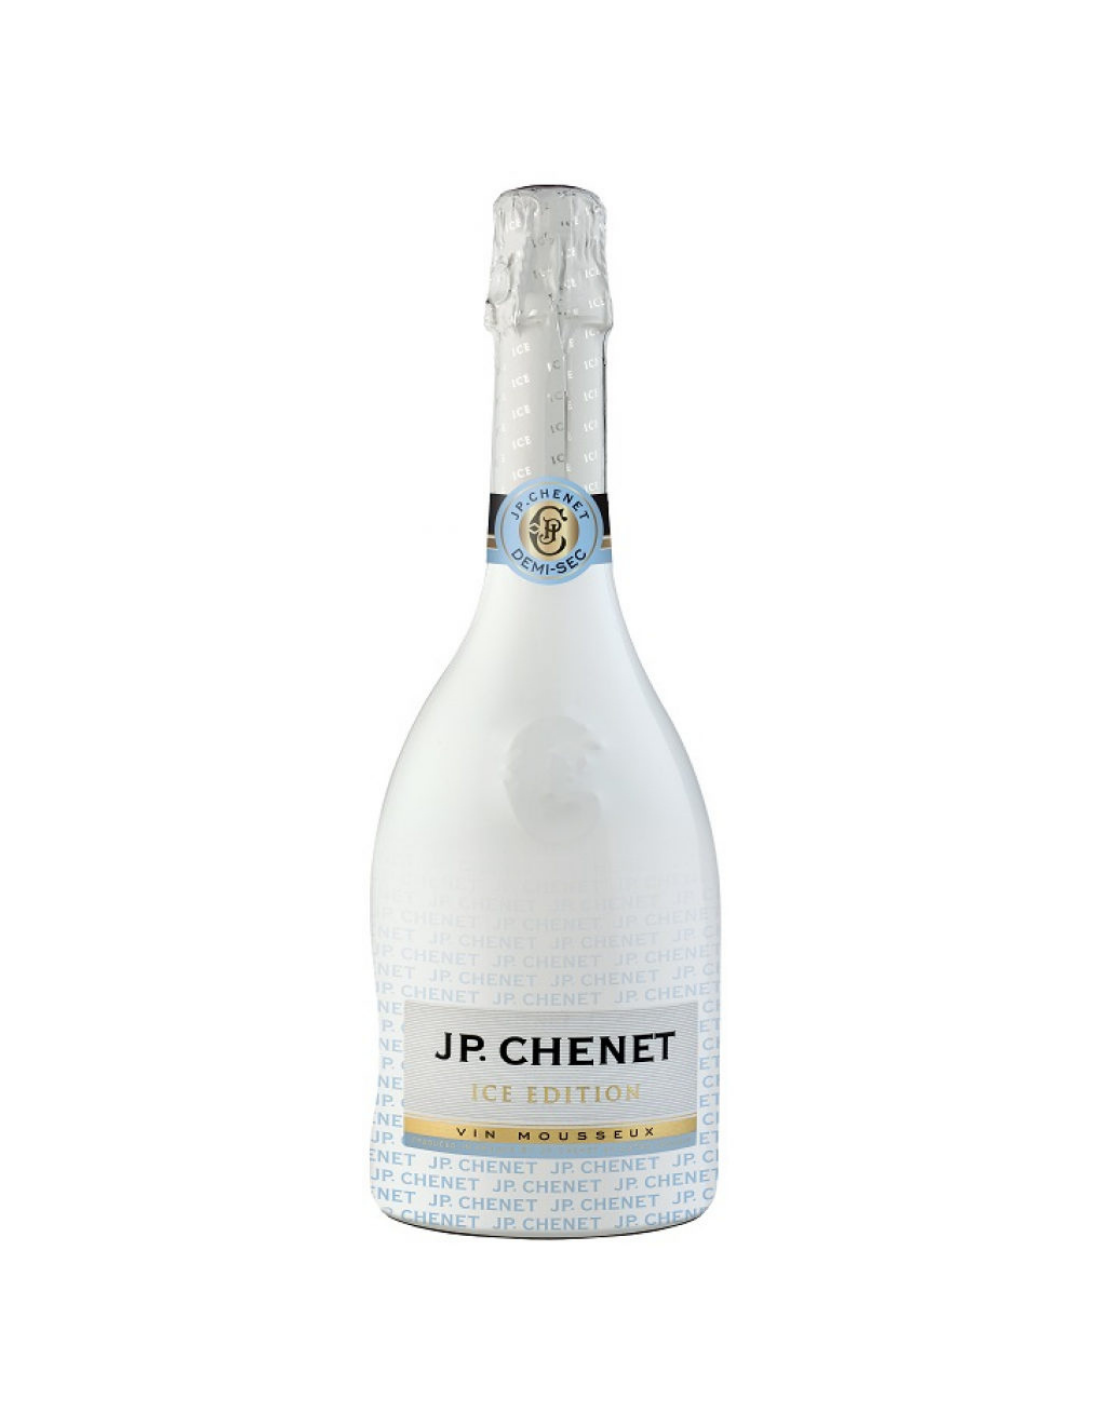 Vin spumant alb demisec JP Chenet Ice Edition, 0.75L, 10.5% alc., Franta alcooldiscount.ro